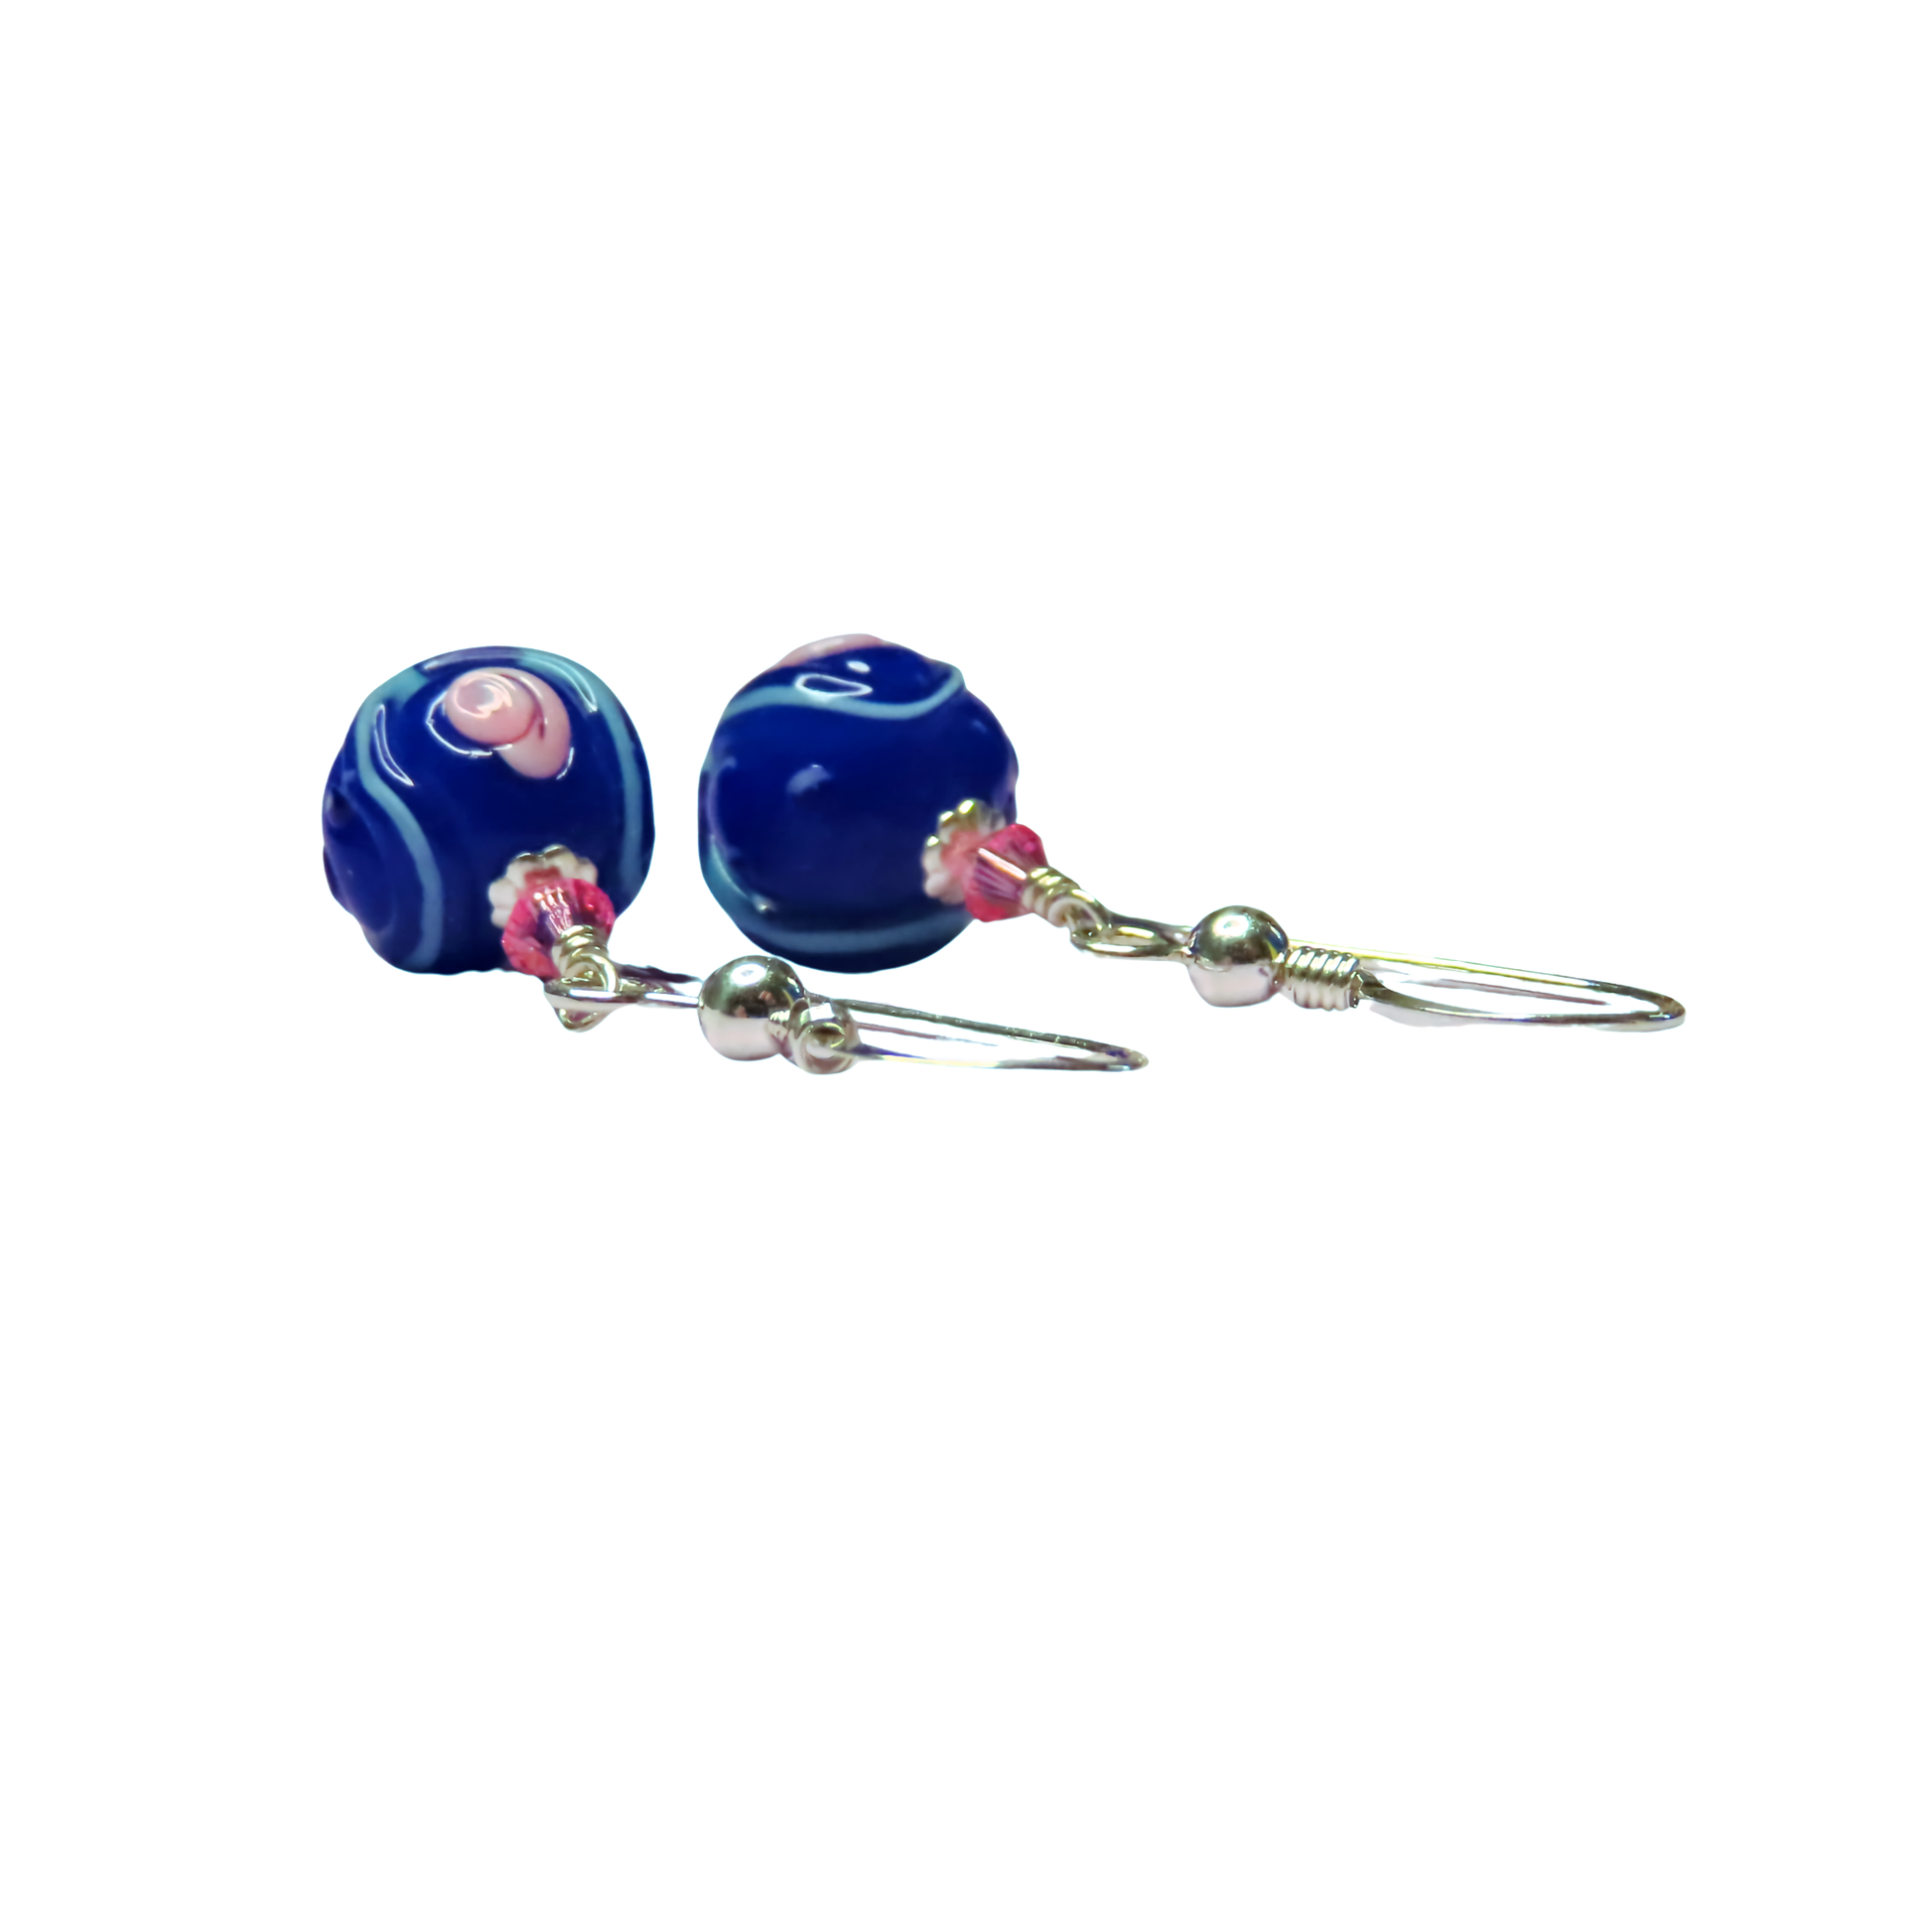 Murano glass small cobalt blue rose silver earrings